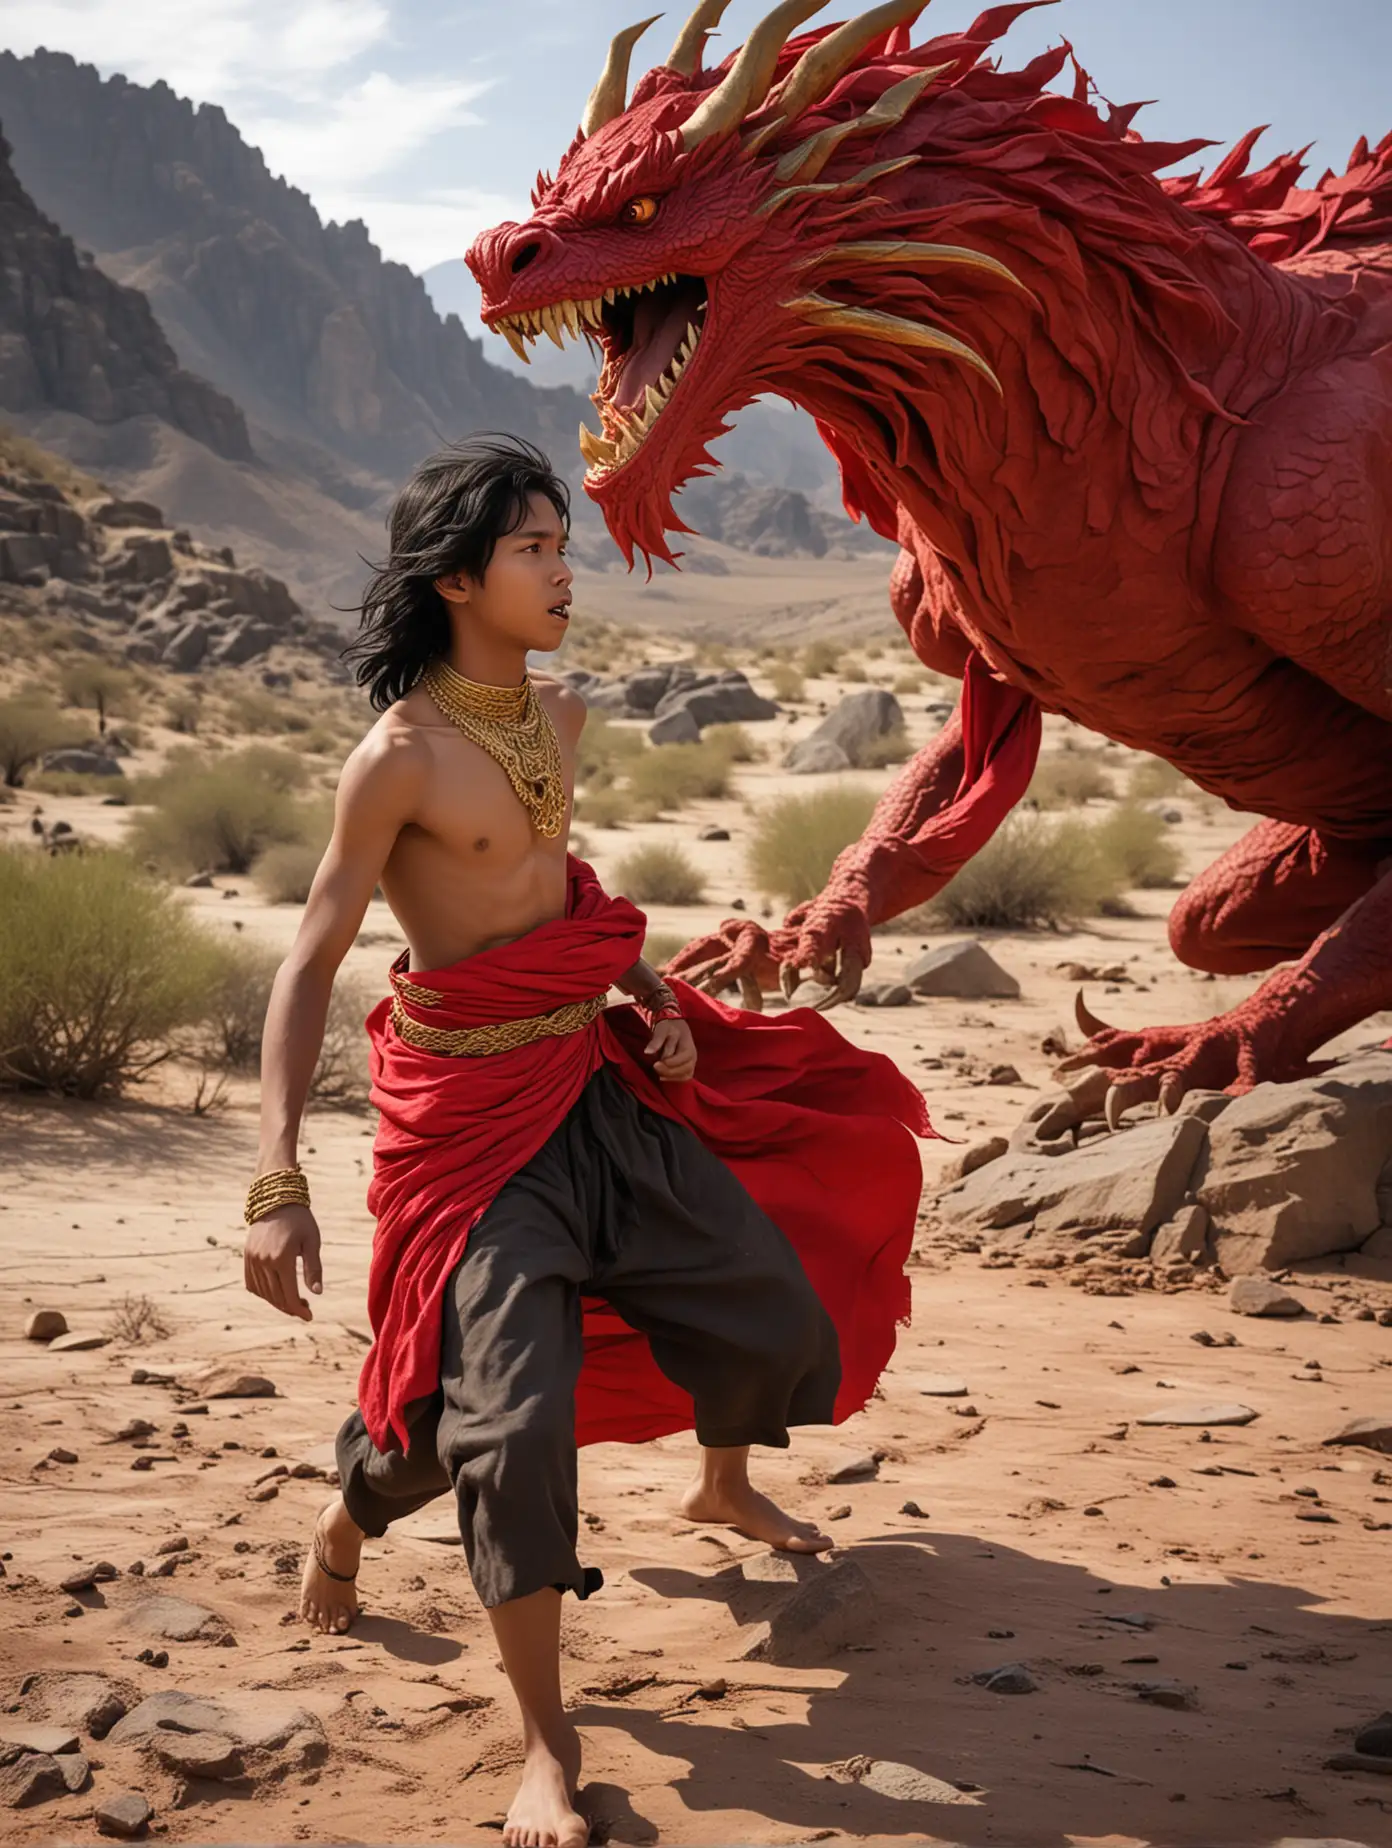 Indonesian-Boy-Battles-Giant-Red-Dragon-in-Desert-Rock-Field